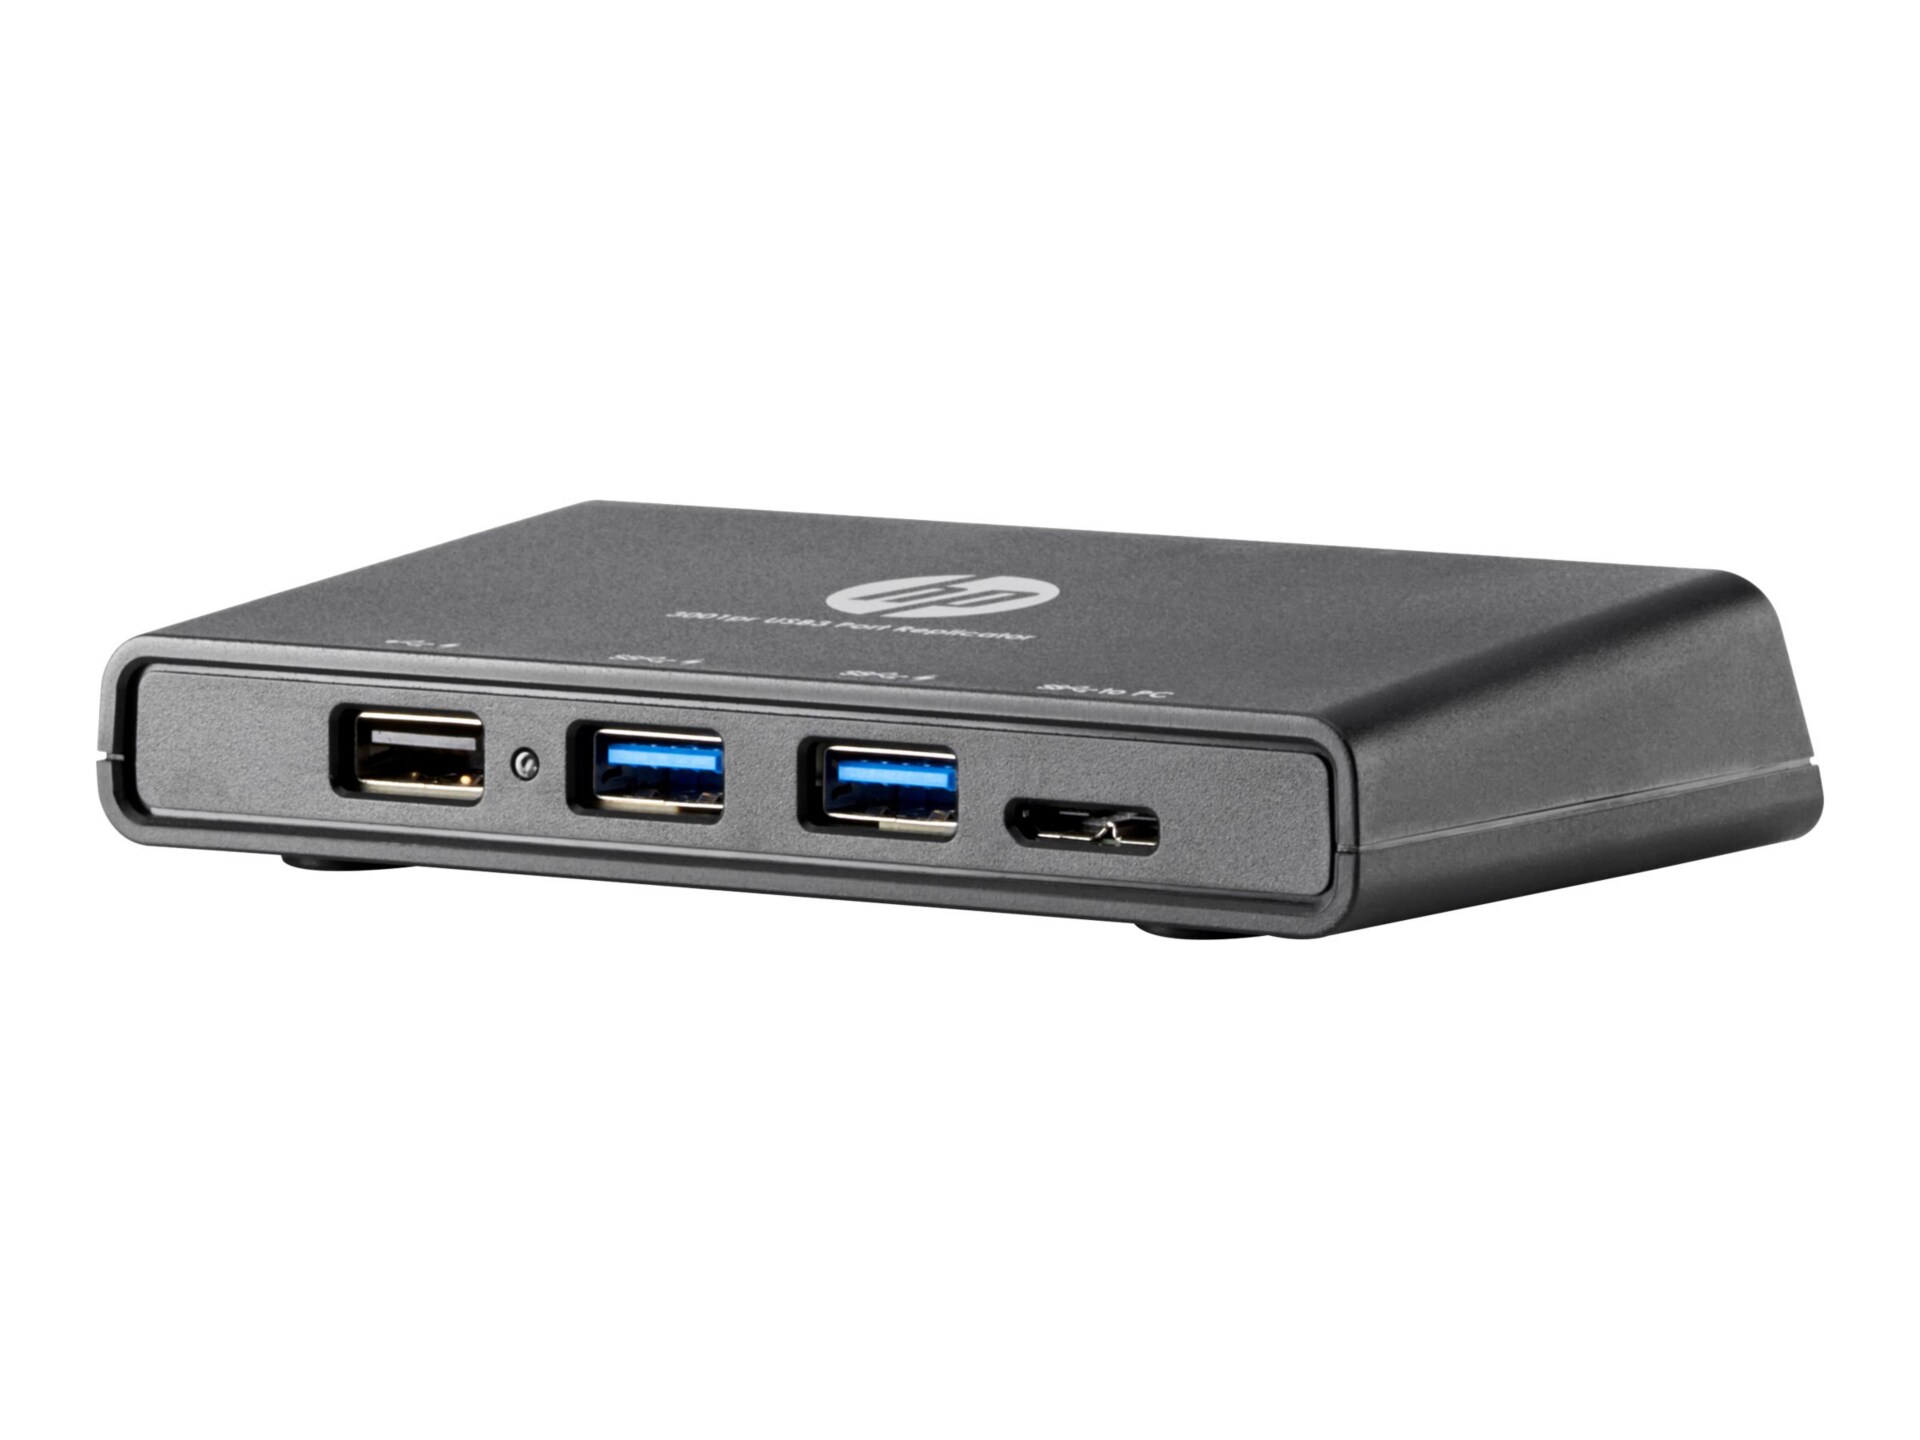 HP 3001pr USB 3.0 Port Replicator